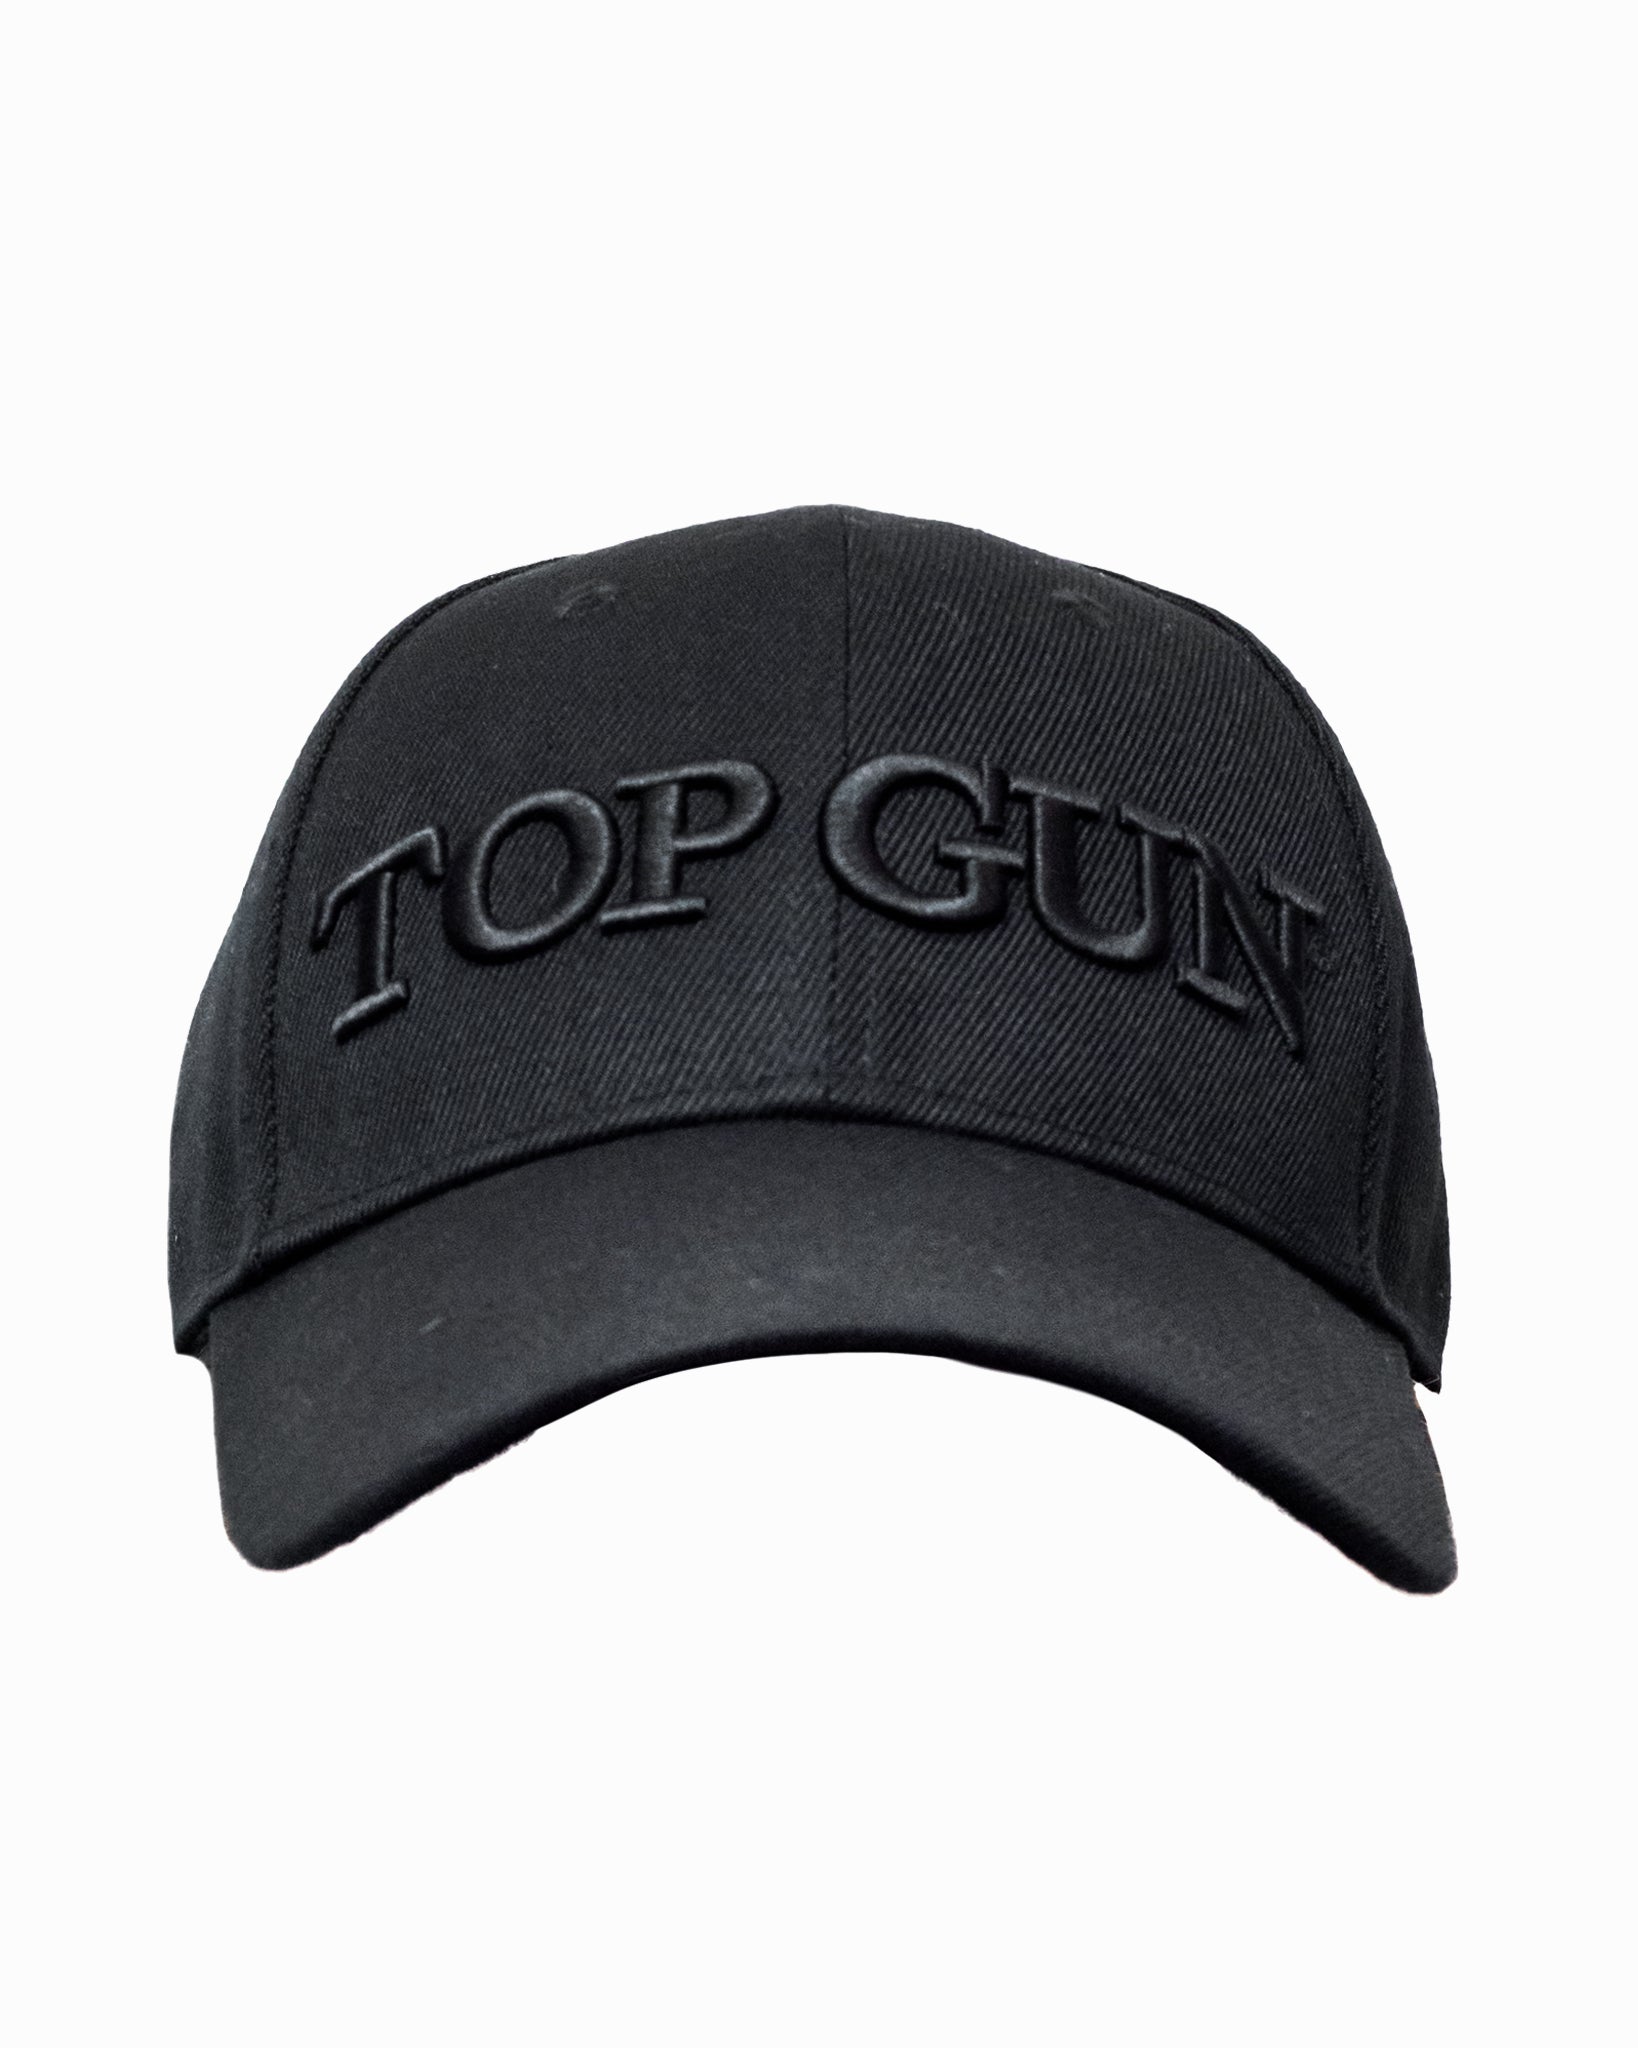 Official Store The Top – Top | Store Gun Gun Logo Top Gun Cap